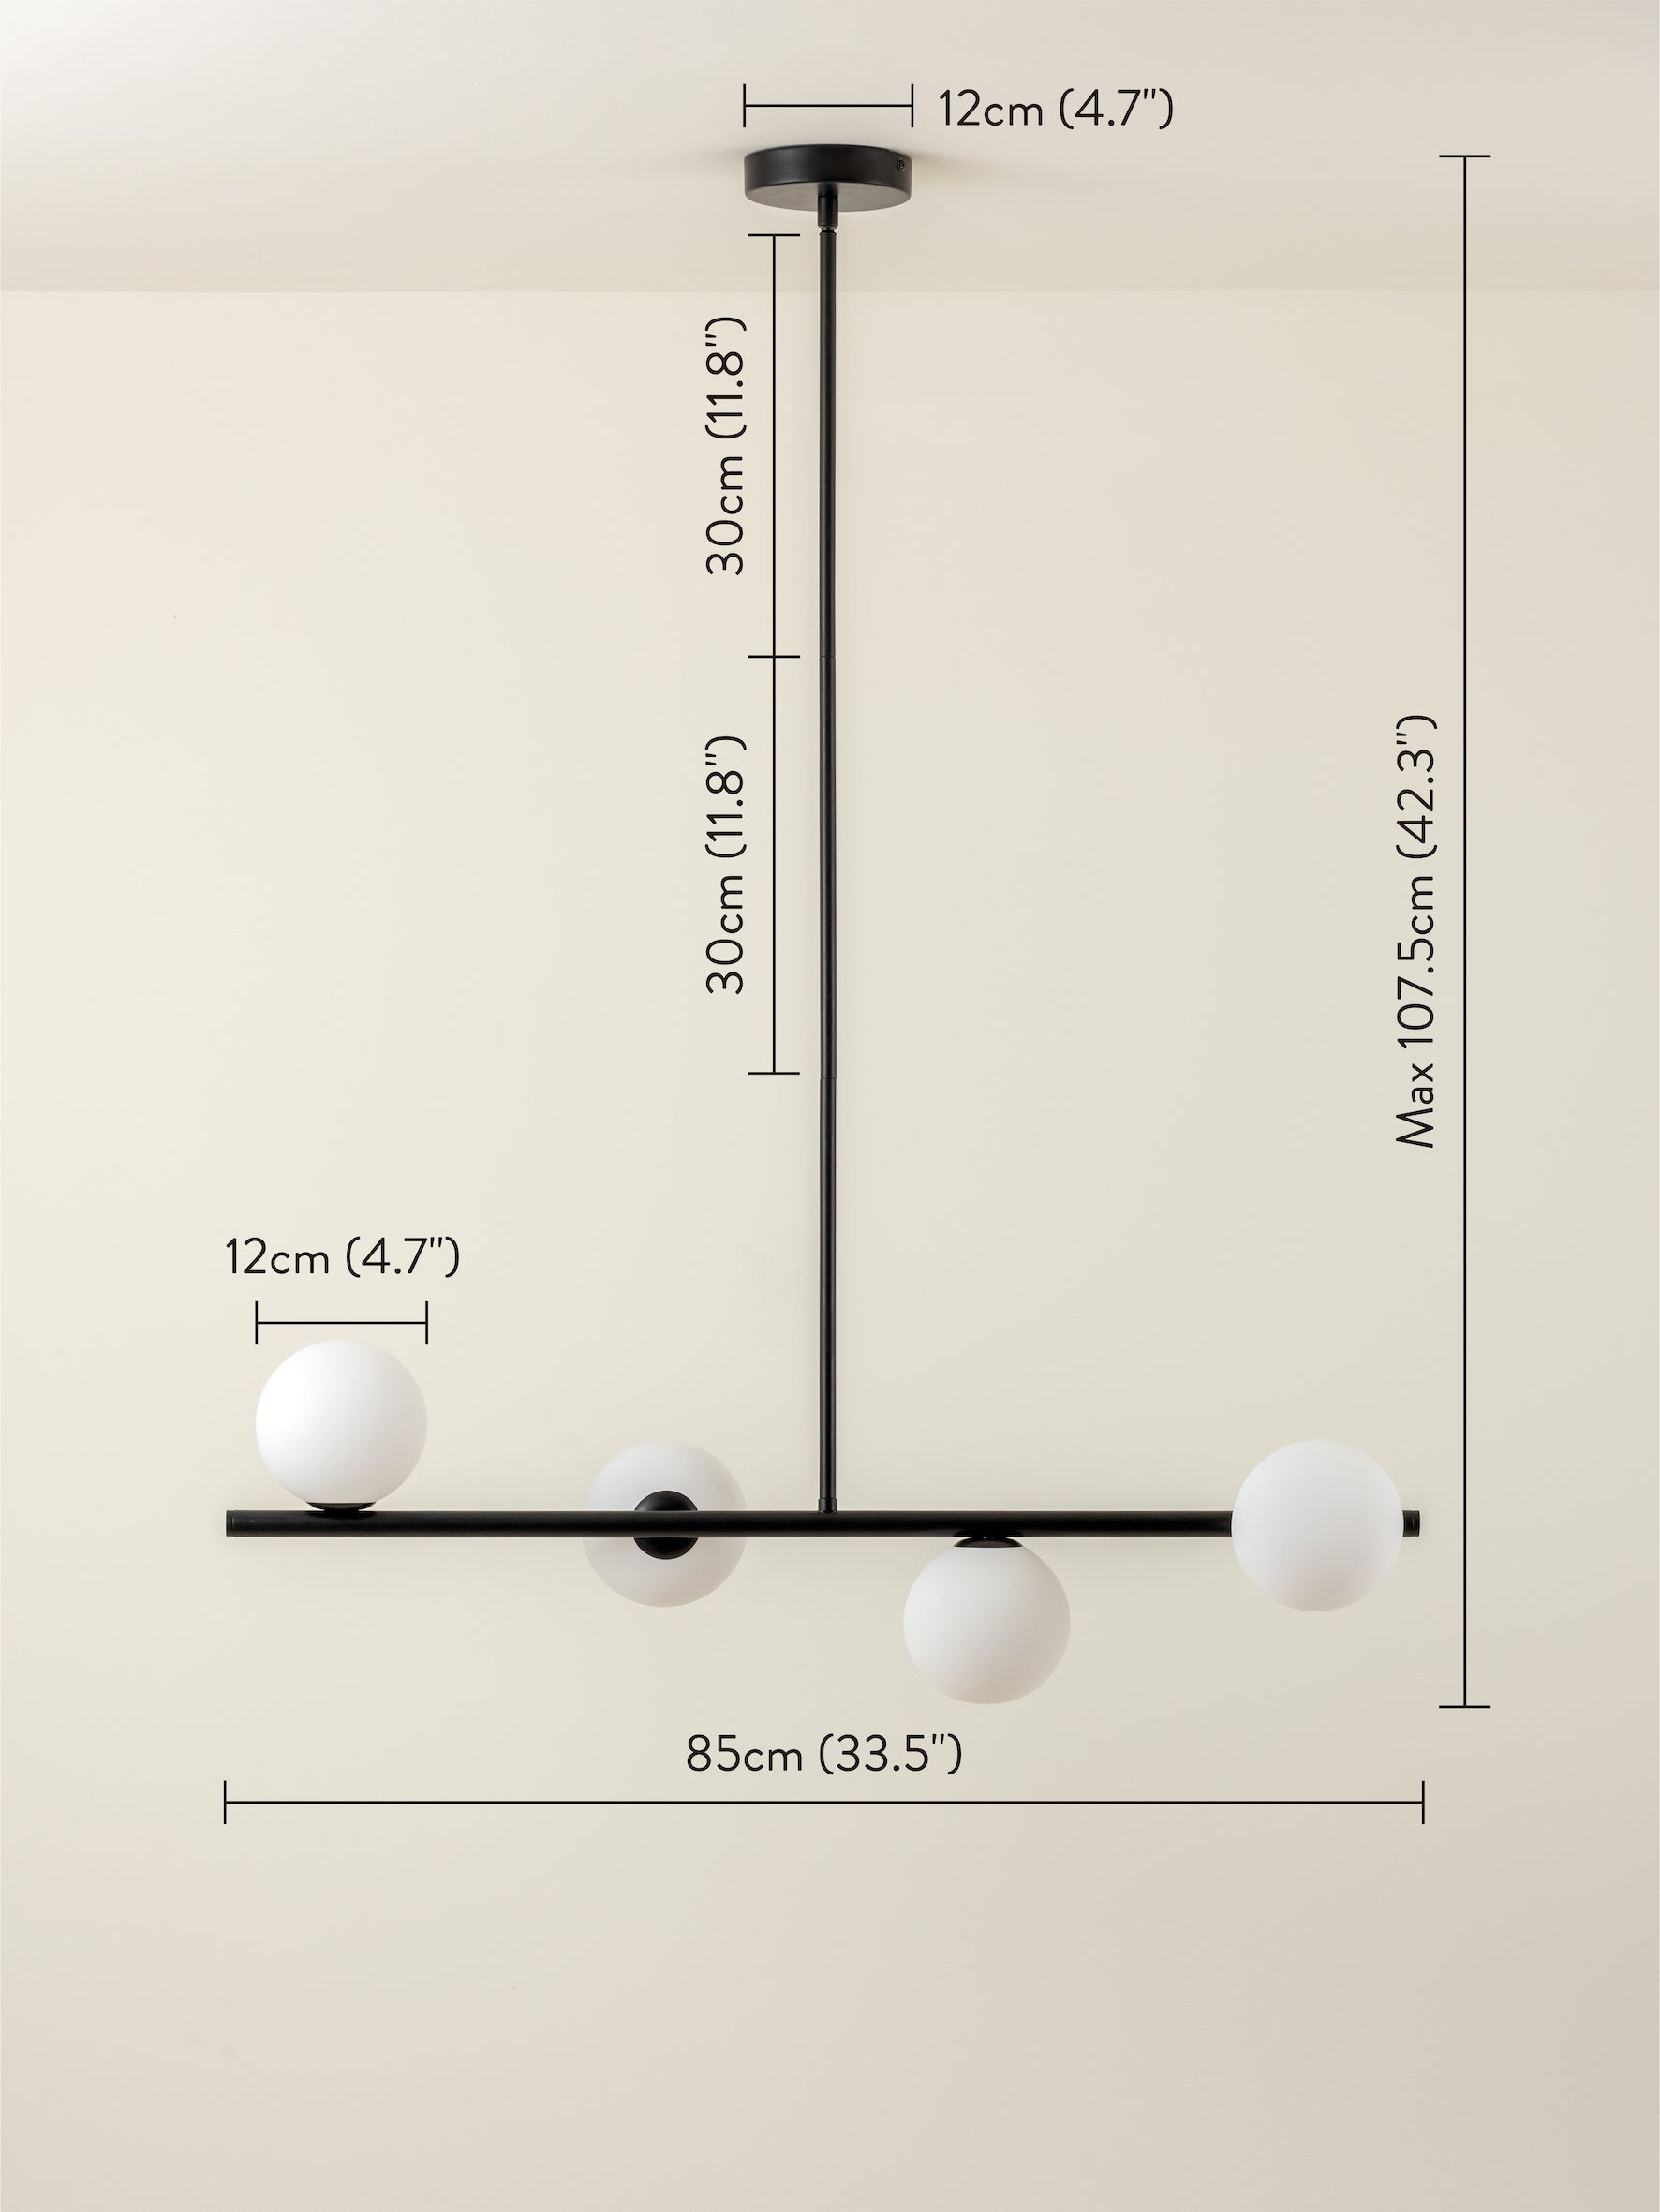 Perch - 4 light matt black and opal pendant bar | Ceiling Light | Lights & Lamps | UK | Modern Affordable Designer Lighting